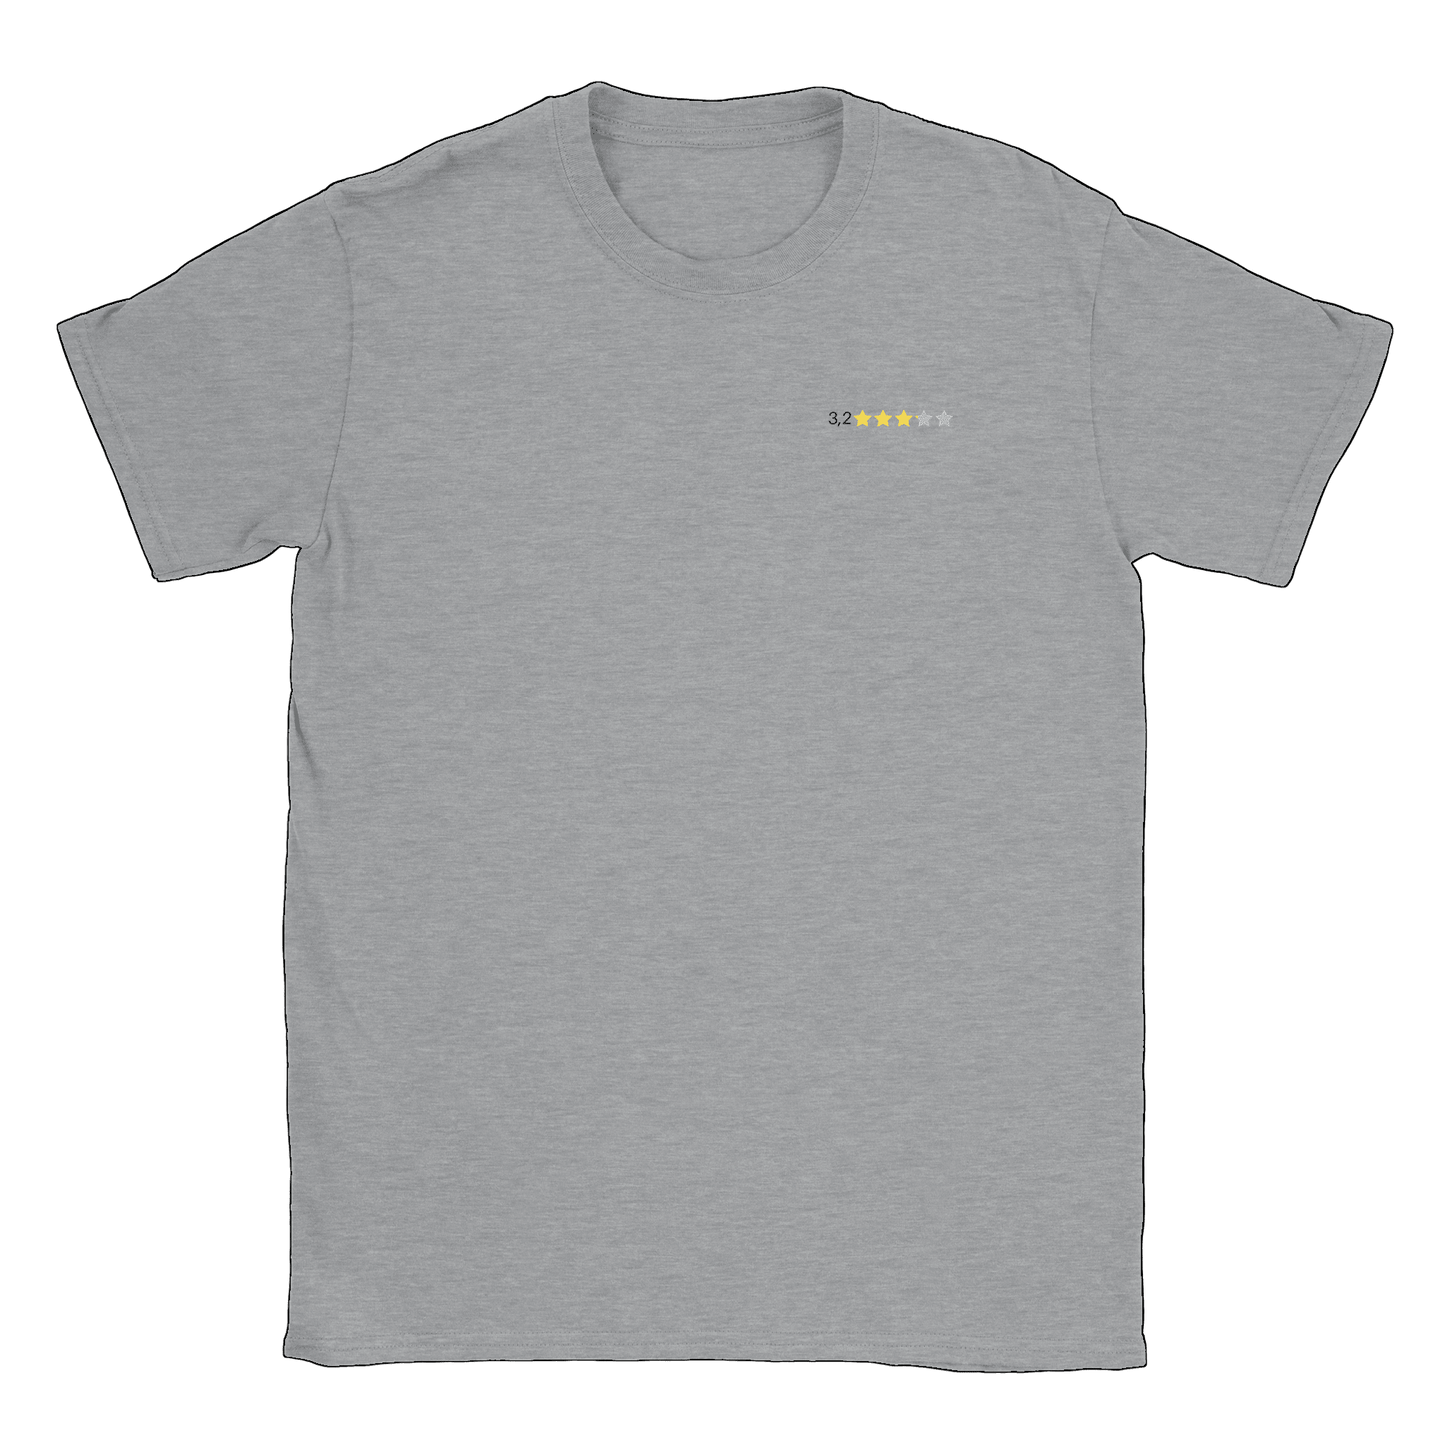 3,2 - T-shirt Sports Grey